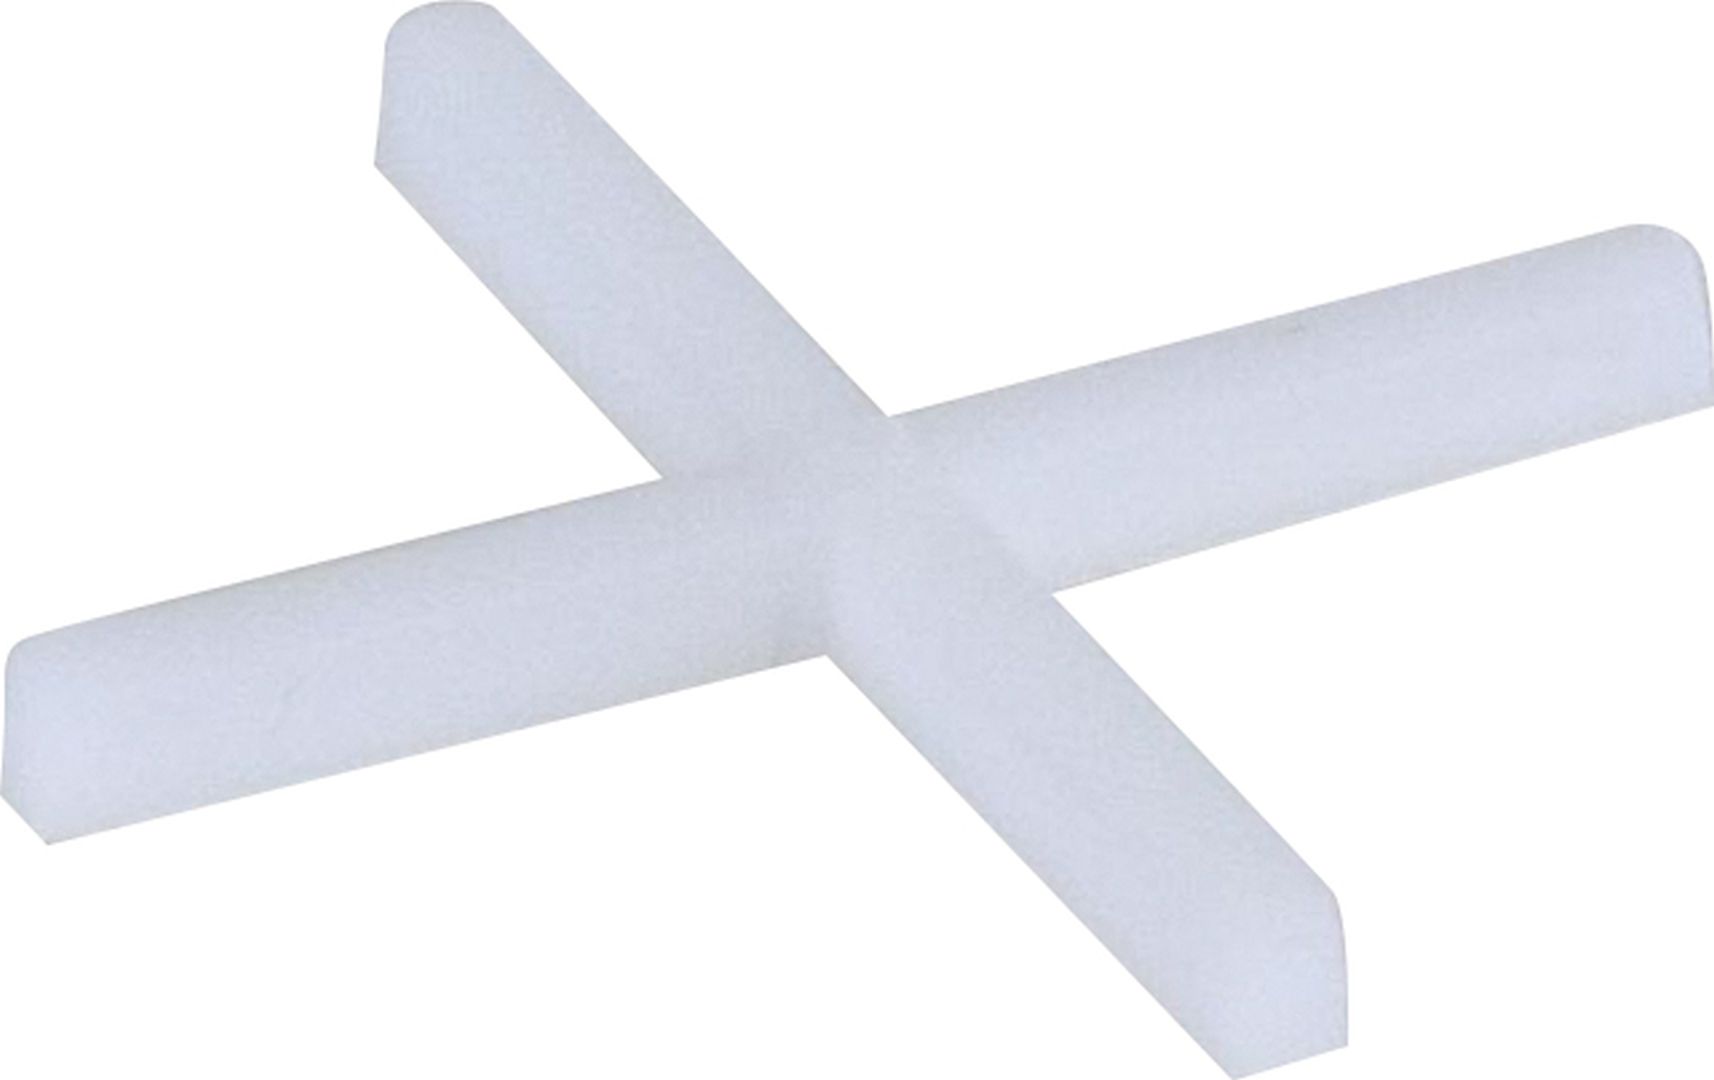 TRIUSO Fliesenkreuze aus Kunststoff, weiß, 250 Stück, 5,0 mm 